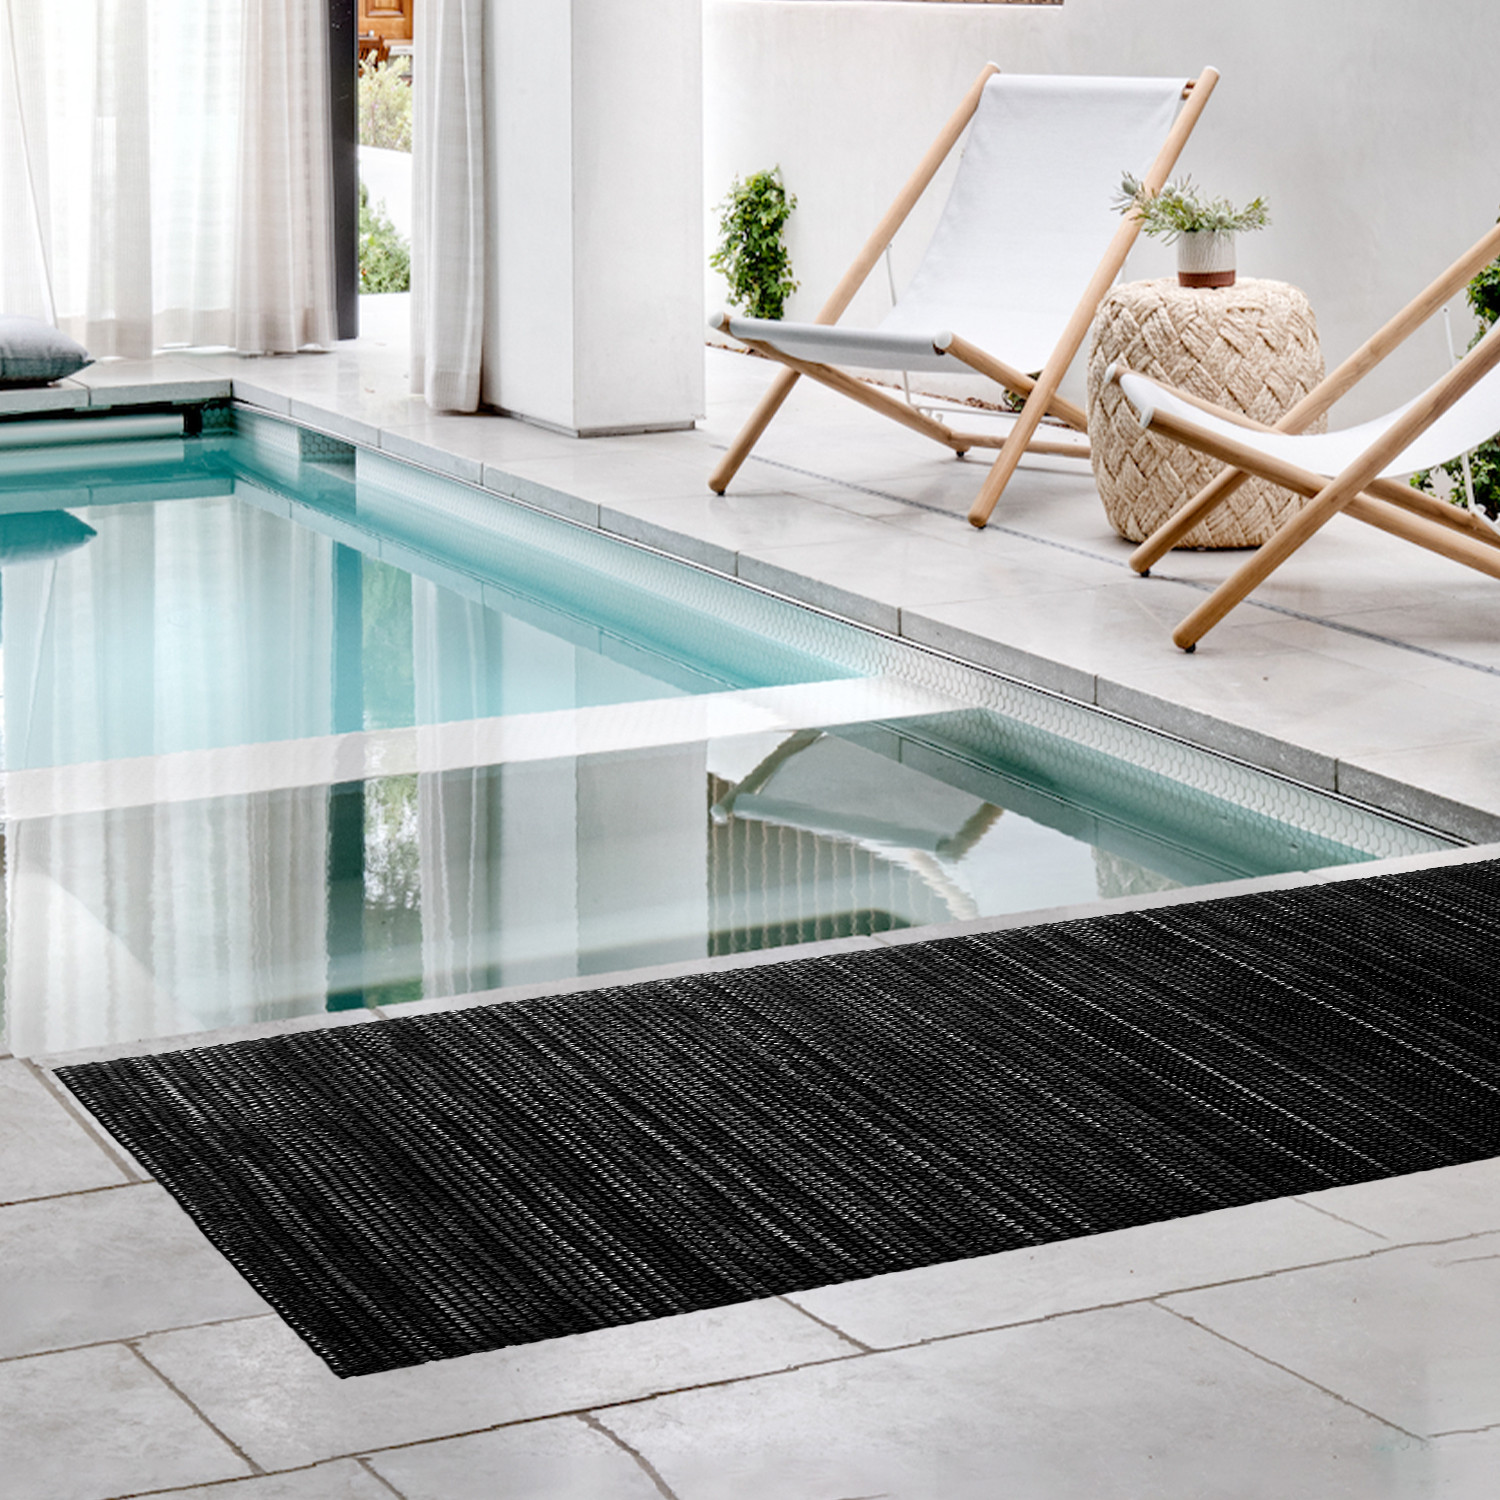 Kuber Industries Rubber Waterproof Anti-Skid Swimming Pool Mat|Shower Mat|Rainmat For Entrance Area,Bathroom,2 x 10 Feet (Black)